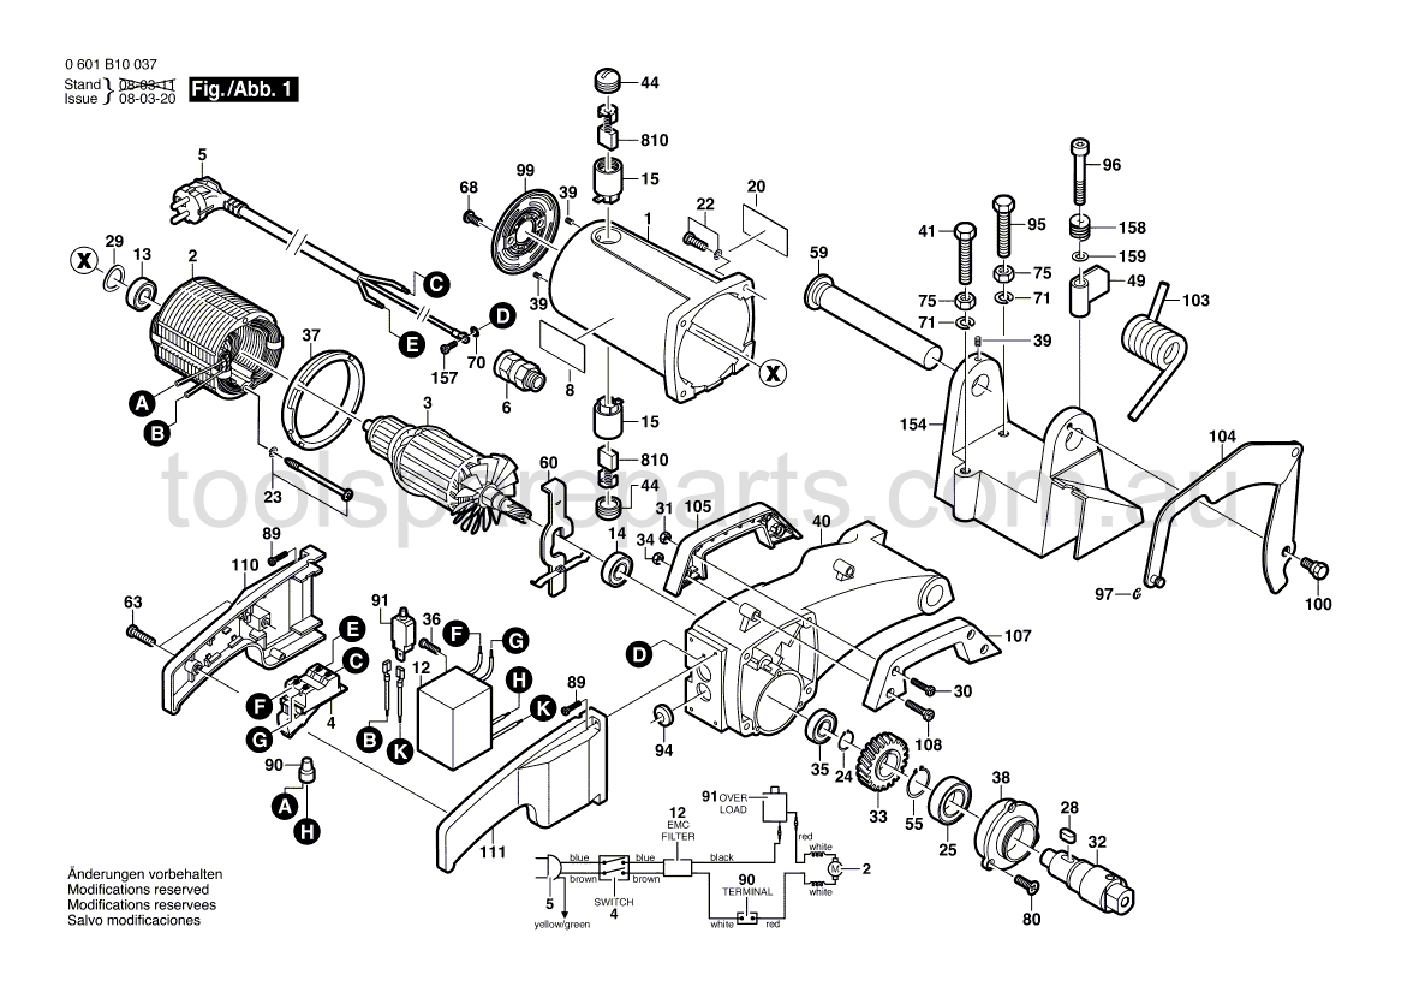 Bosch GCO 14-1 0601B10037  Diagram 1